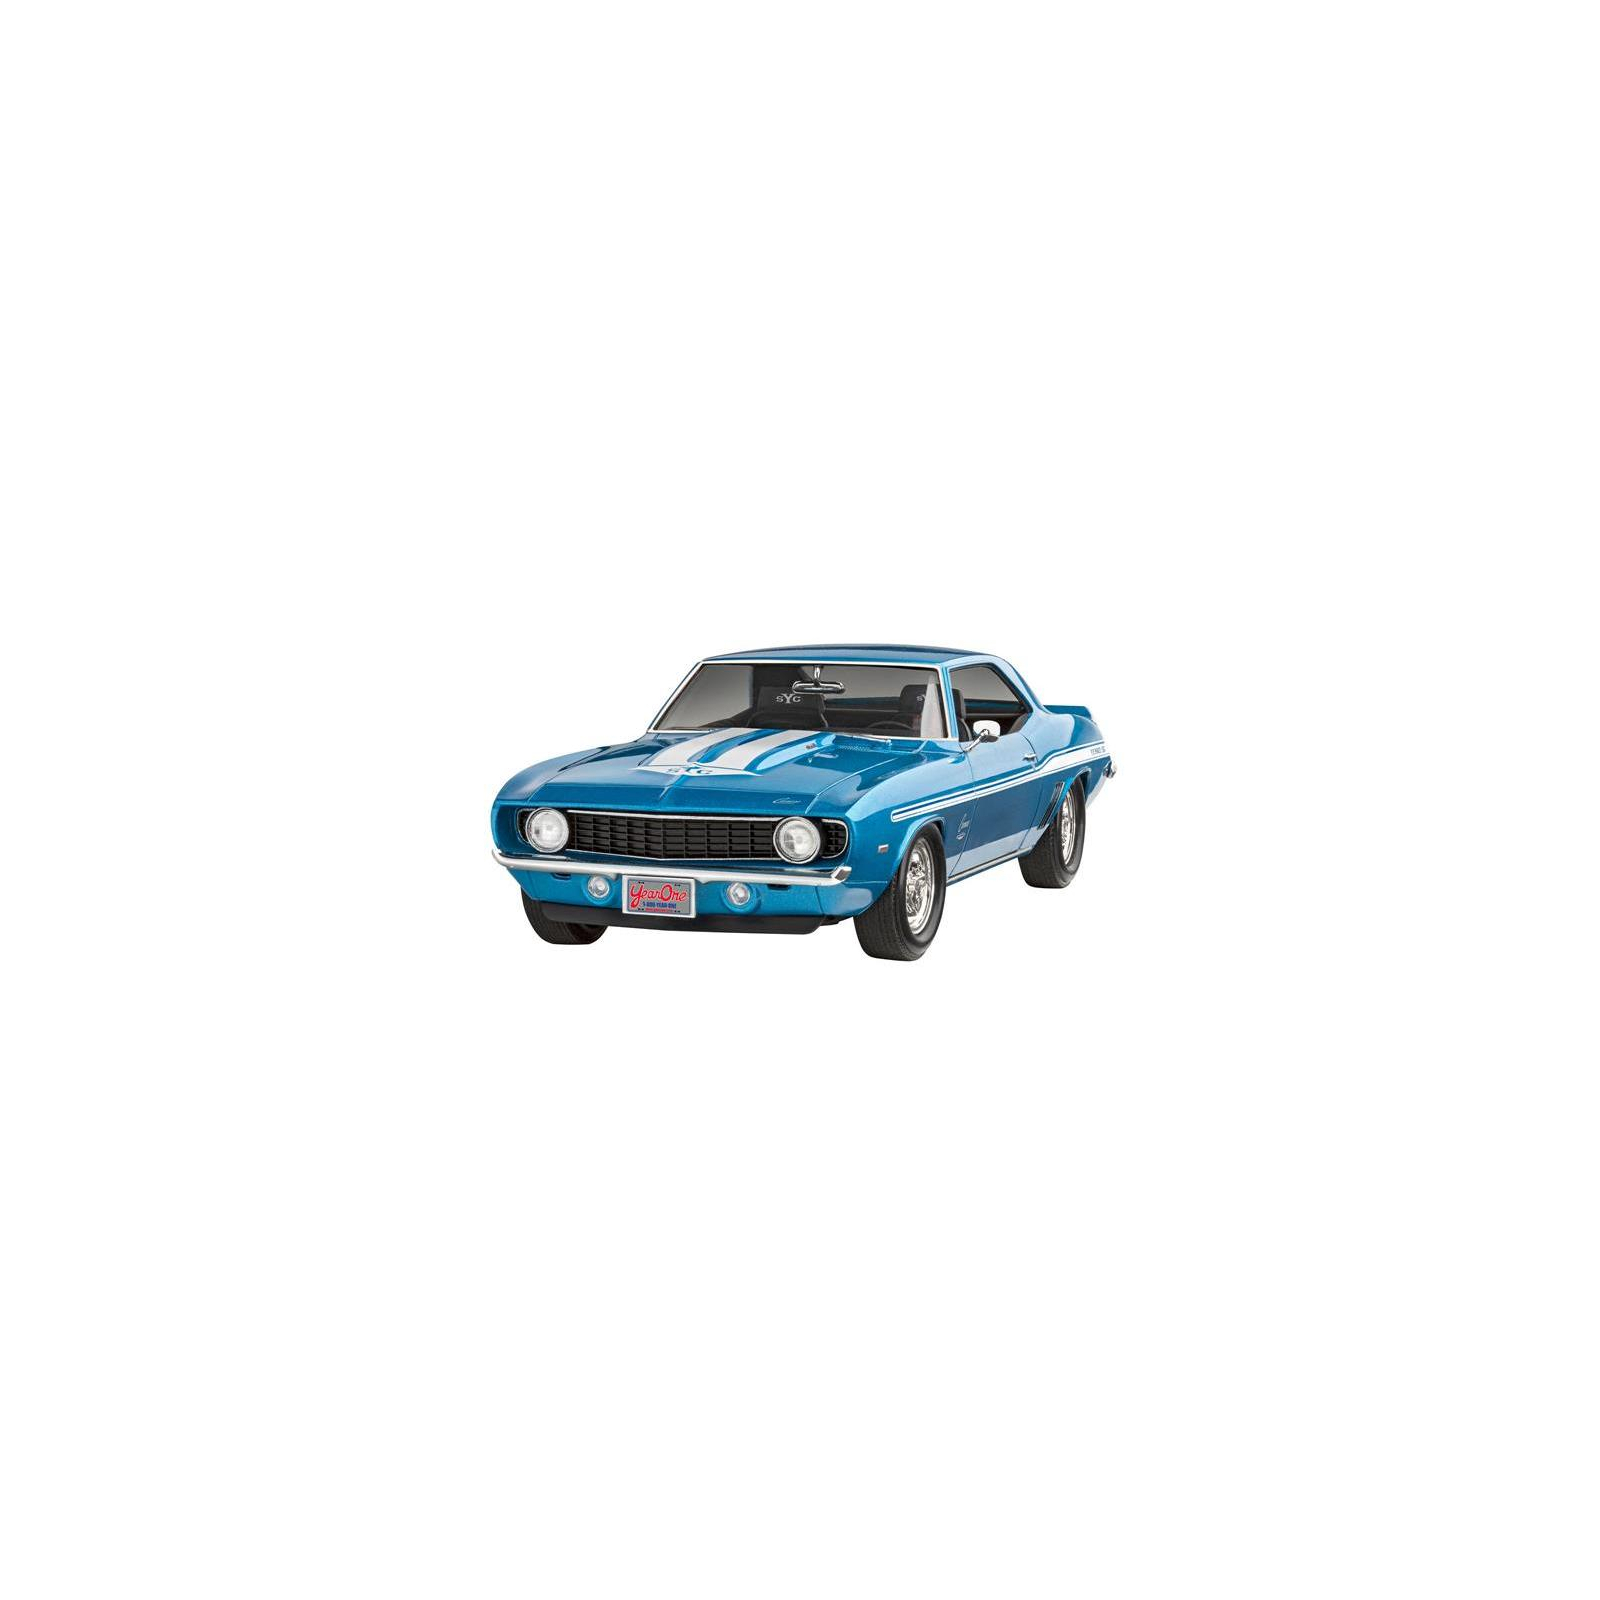 Збірна модель Revell Chevy Camaro Yenko 1969 з к/ф Форсаж рівень 5, 1:25 (RVL-07694) зображення 3